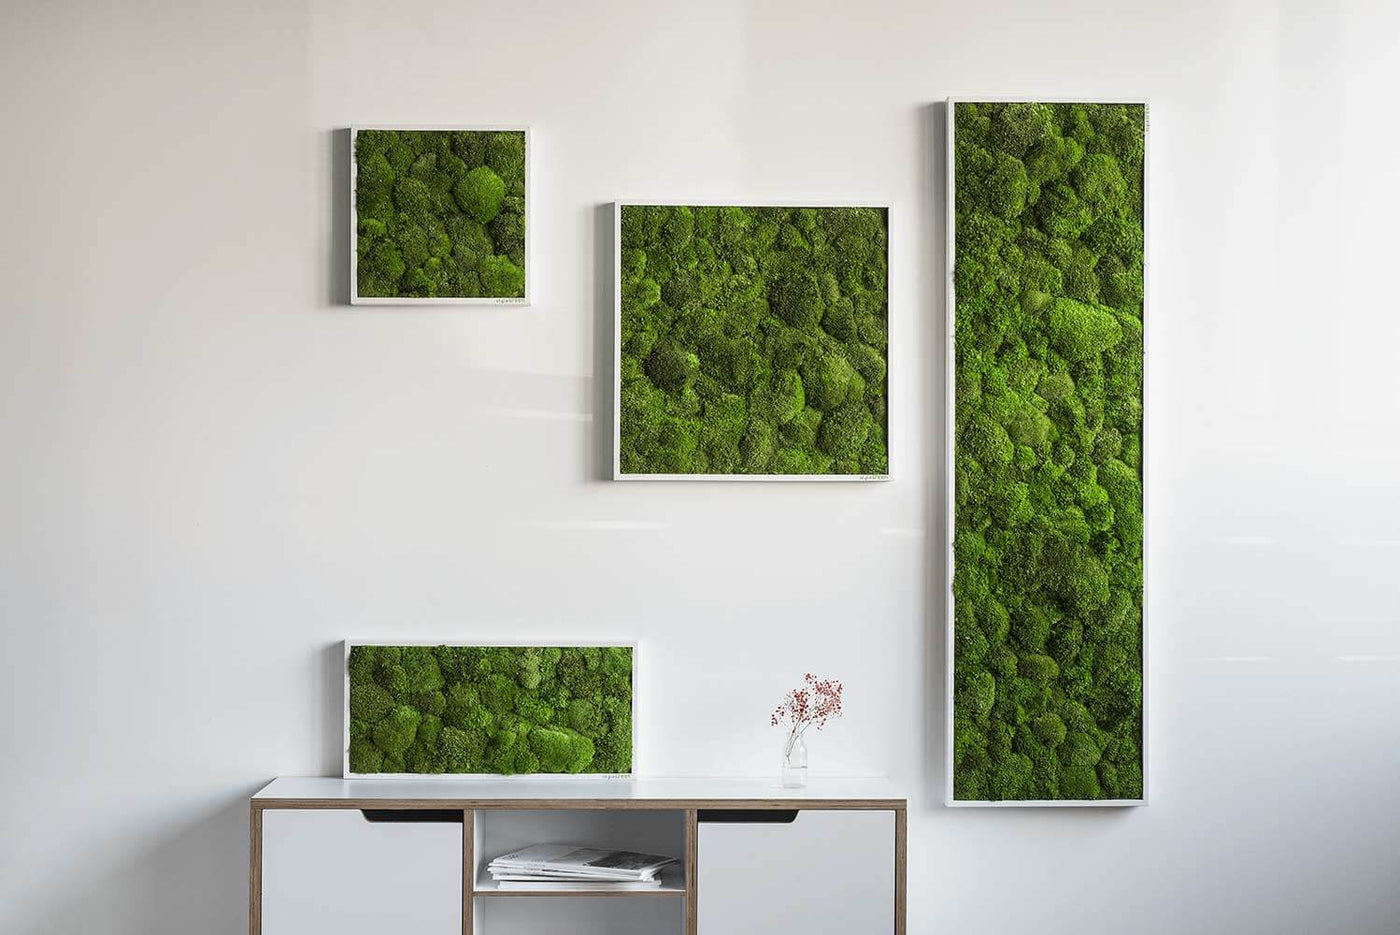 Living Moss Wall Mat | 1 Square Foot